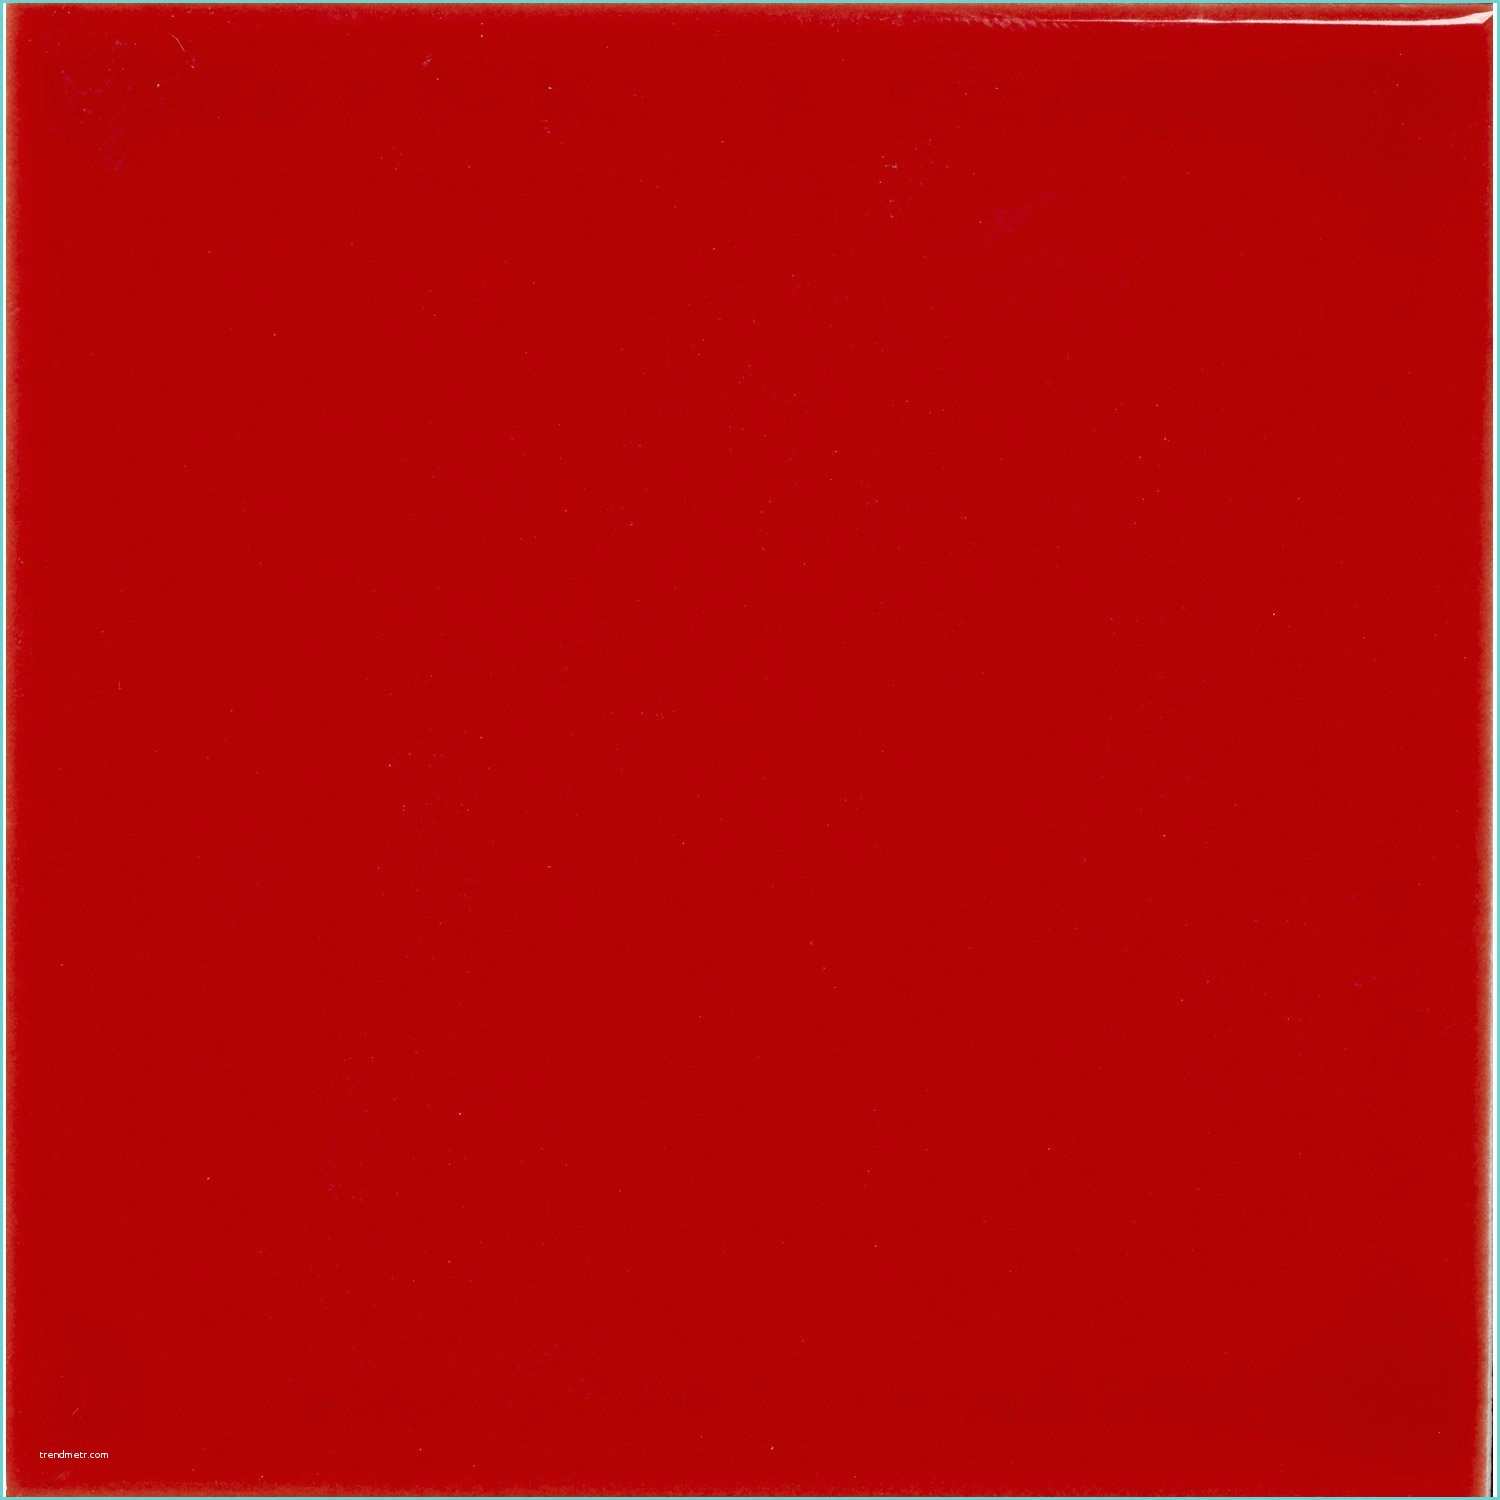 Rouge De Falun Leroy Merlin Faïence Mur Rouge Rouge N°4 astuce L 10 X L 10 Cm